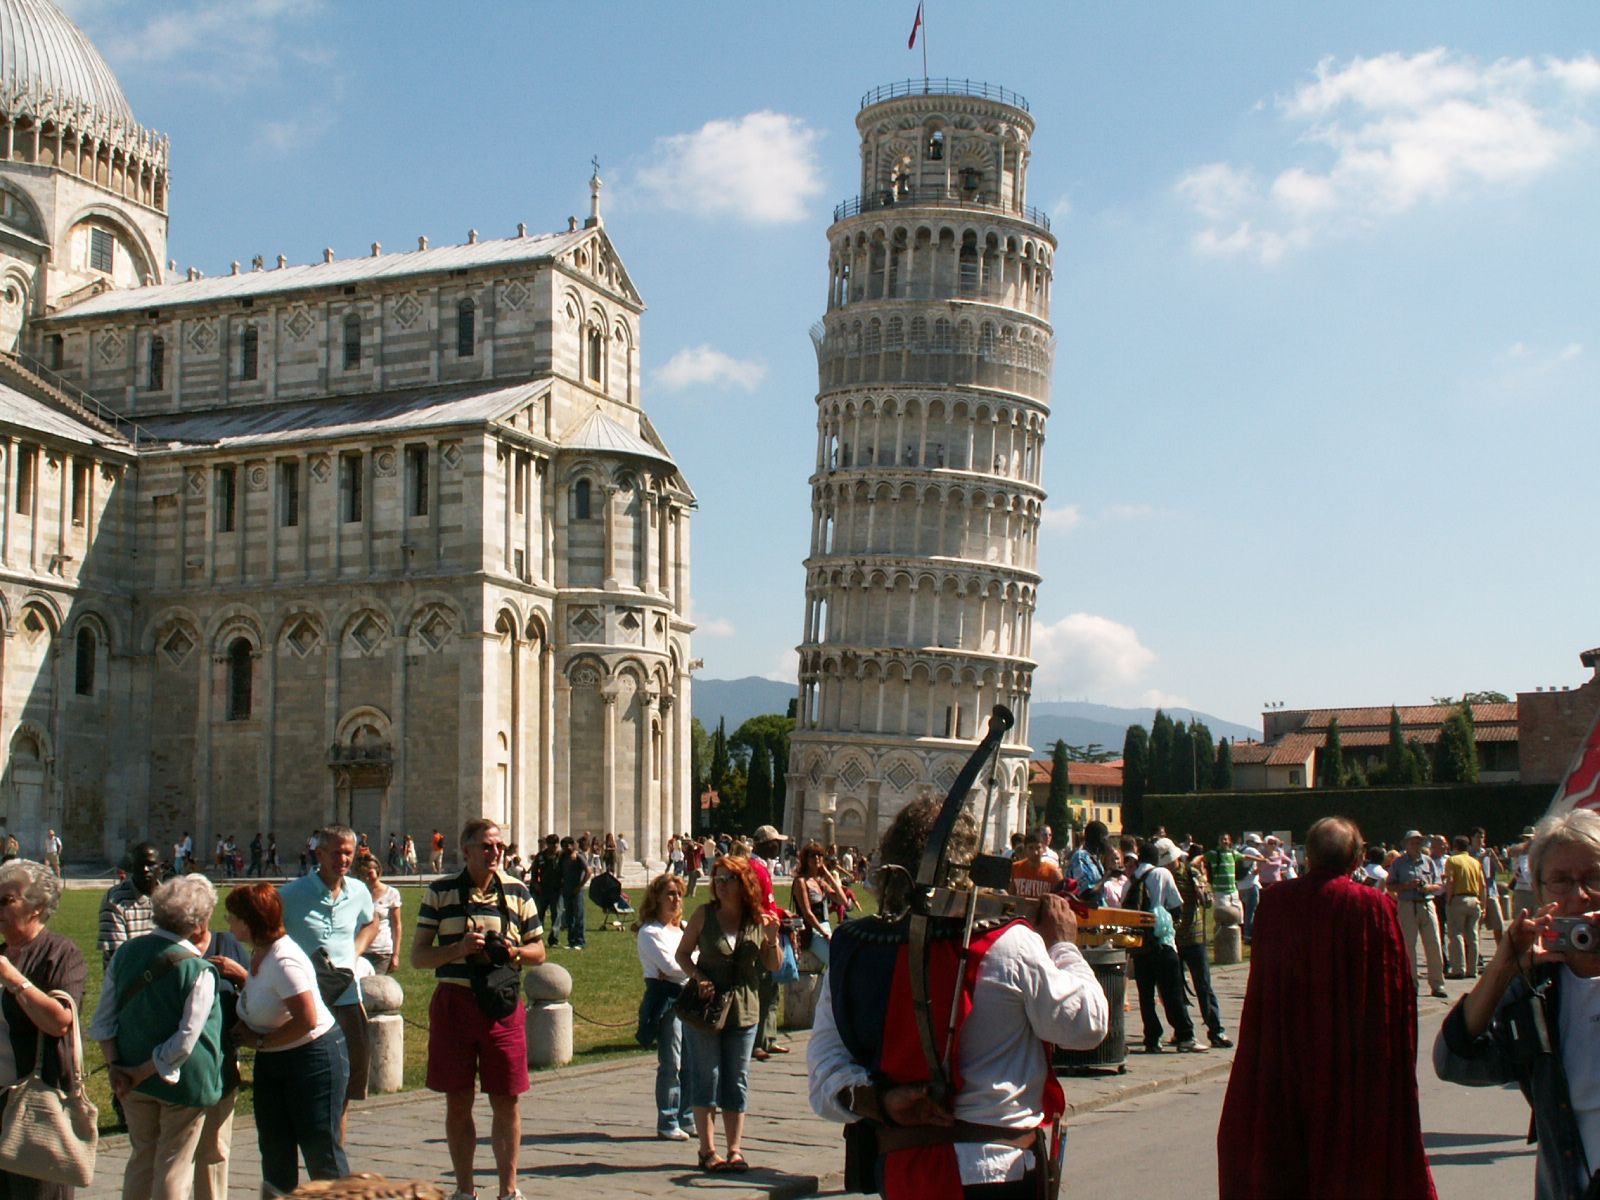 Leaning Tower of Pisa - Europe Wallpaper (622240) - Fanpop